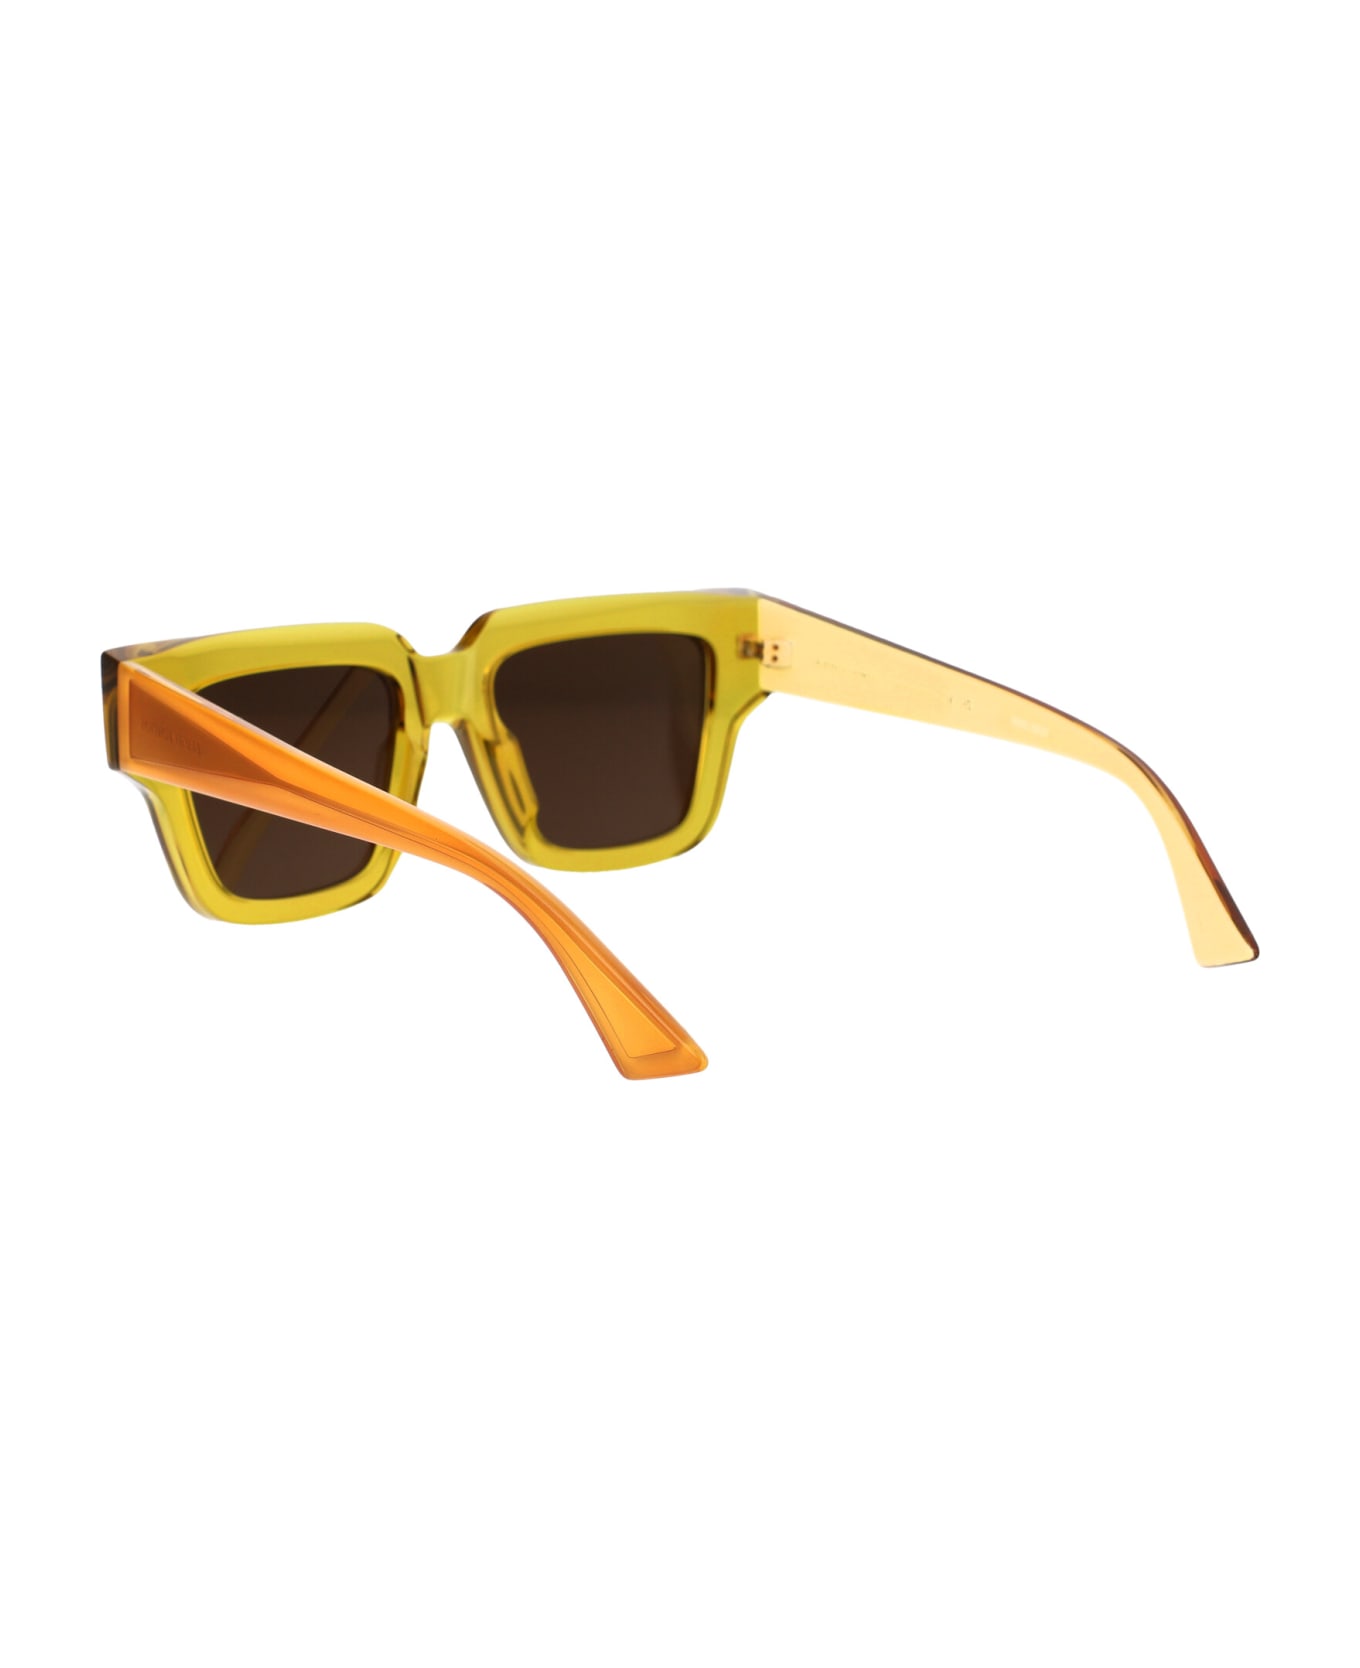 Bottega Veneta Eyewear Bv1276s Sunglasses - 004 YELLOW YELLOW BROWN サングラス